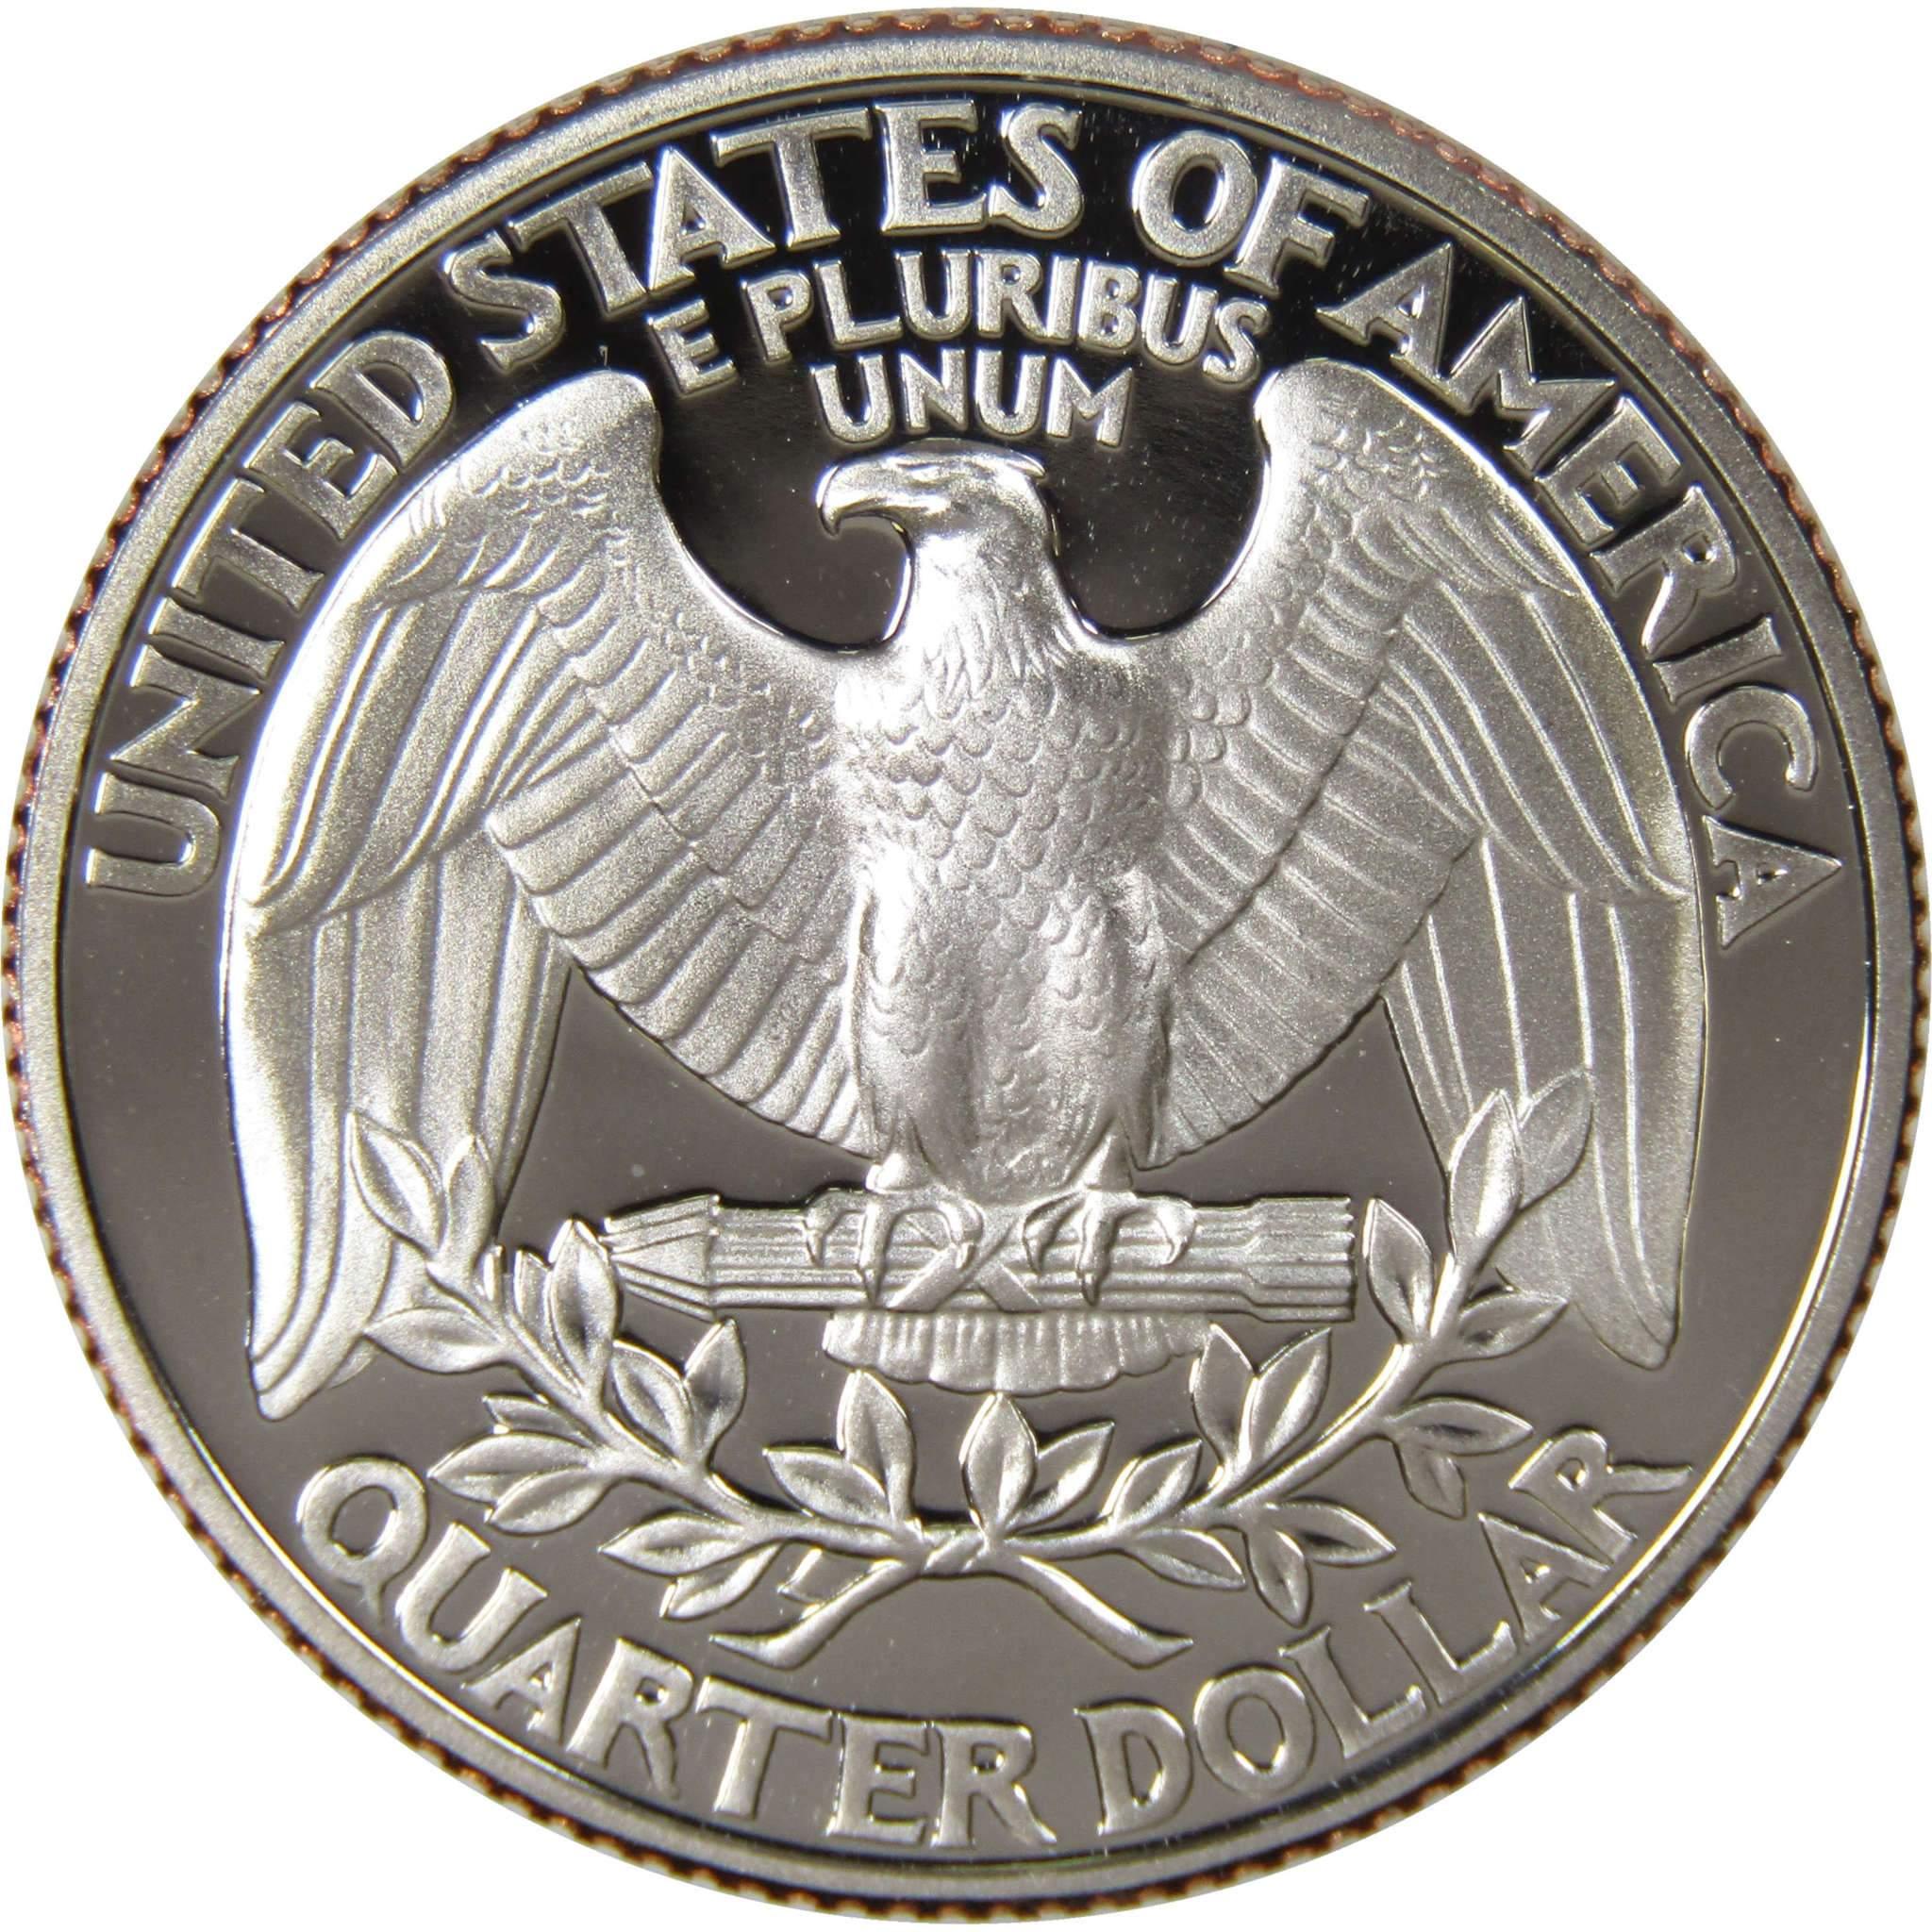 1997 S Washington Quarter Choice Proof Clad 25c US Coin Collectible